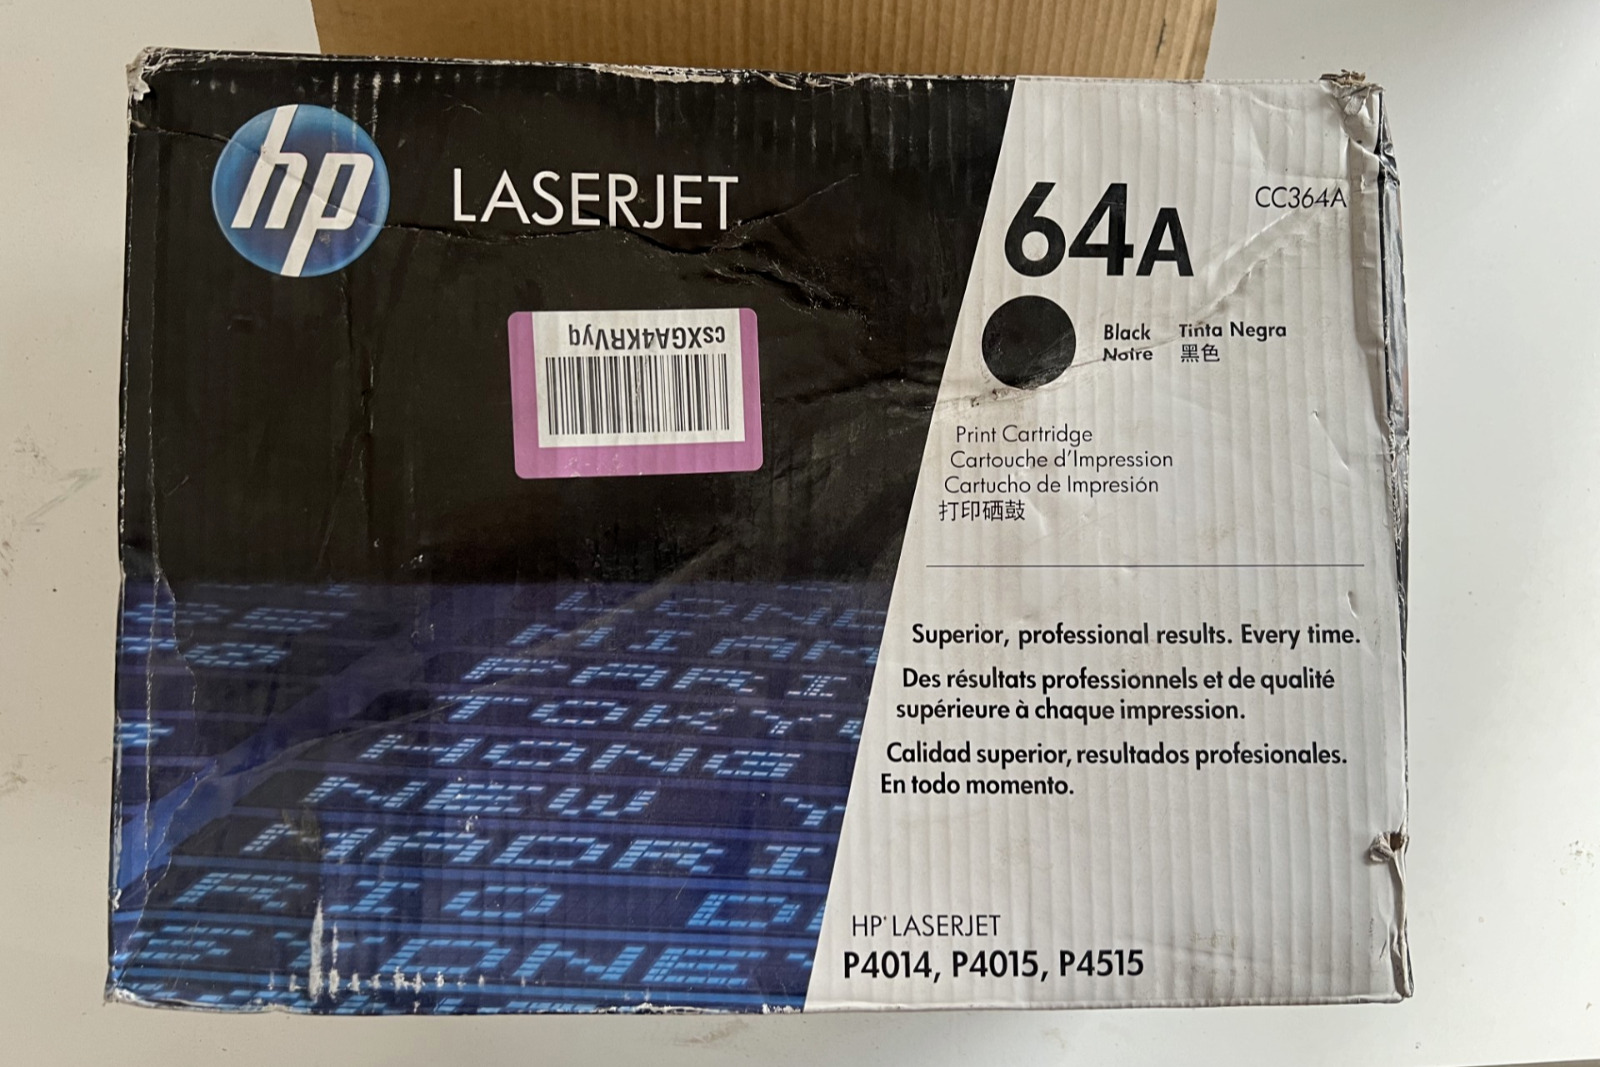 Genuine HP LaserJet 64A CC364A Black Toner Cartridge Sealed in OPEN Box